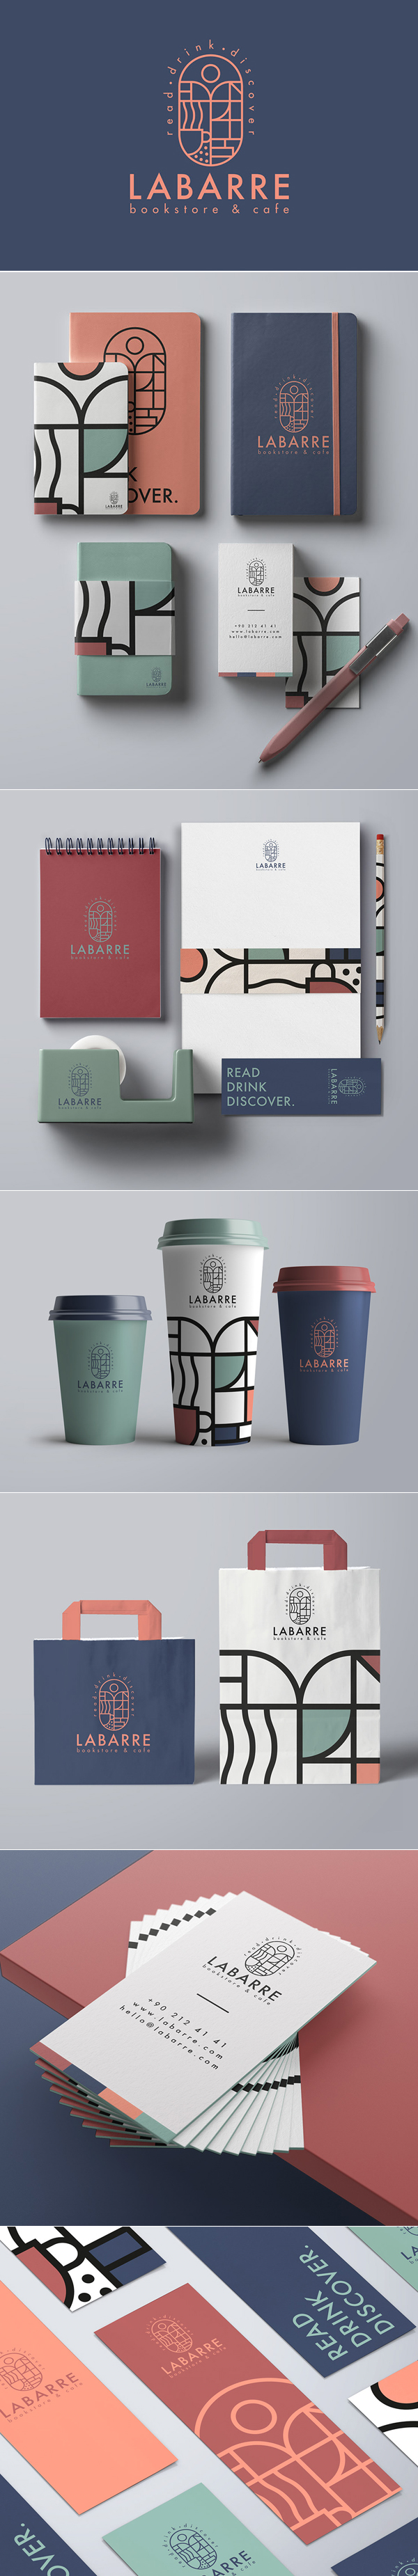 Marca: Labarre Bookstore & Cafe Diseño de marca por ONTO Design Studio